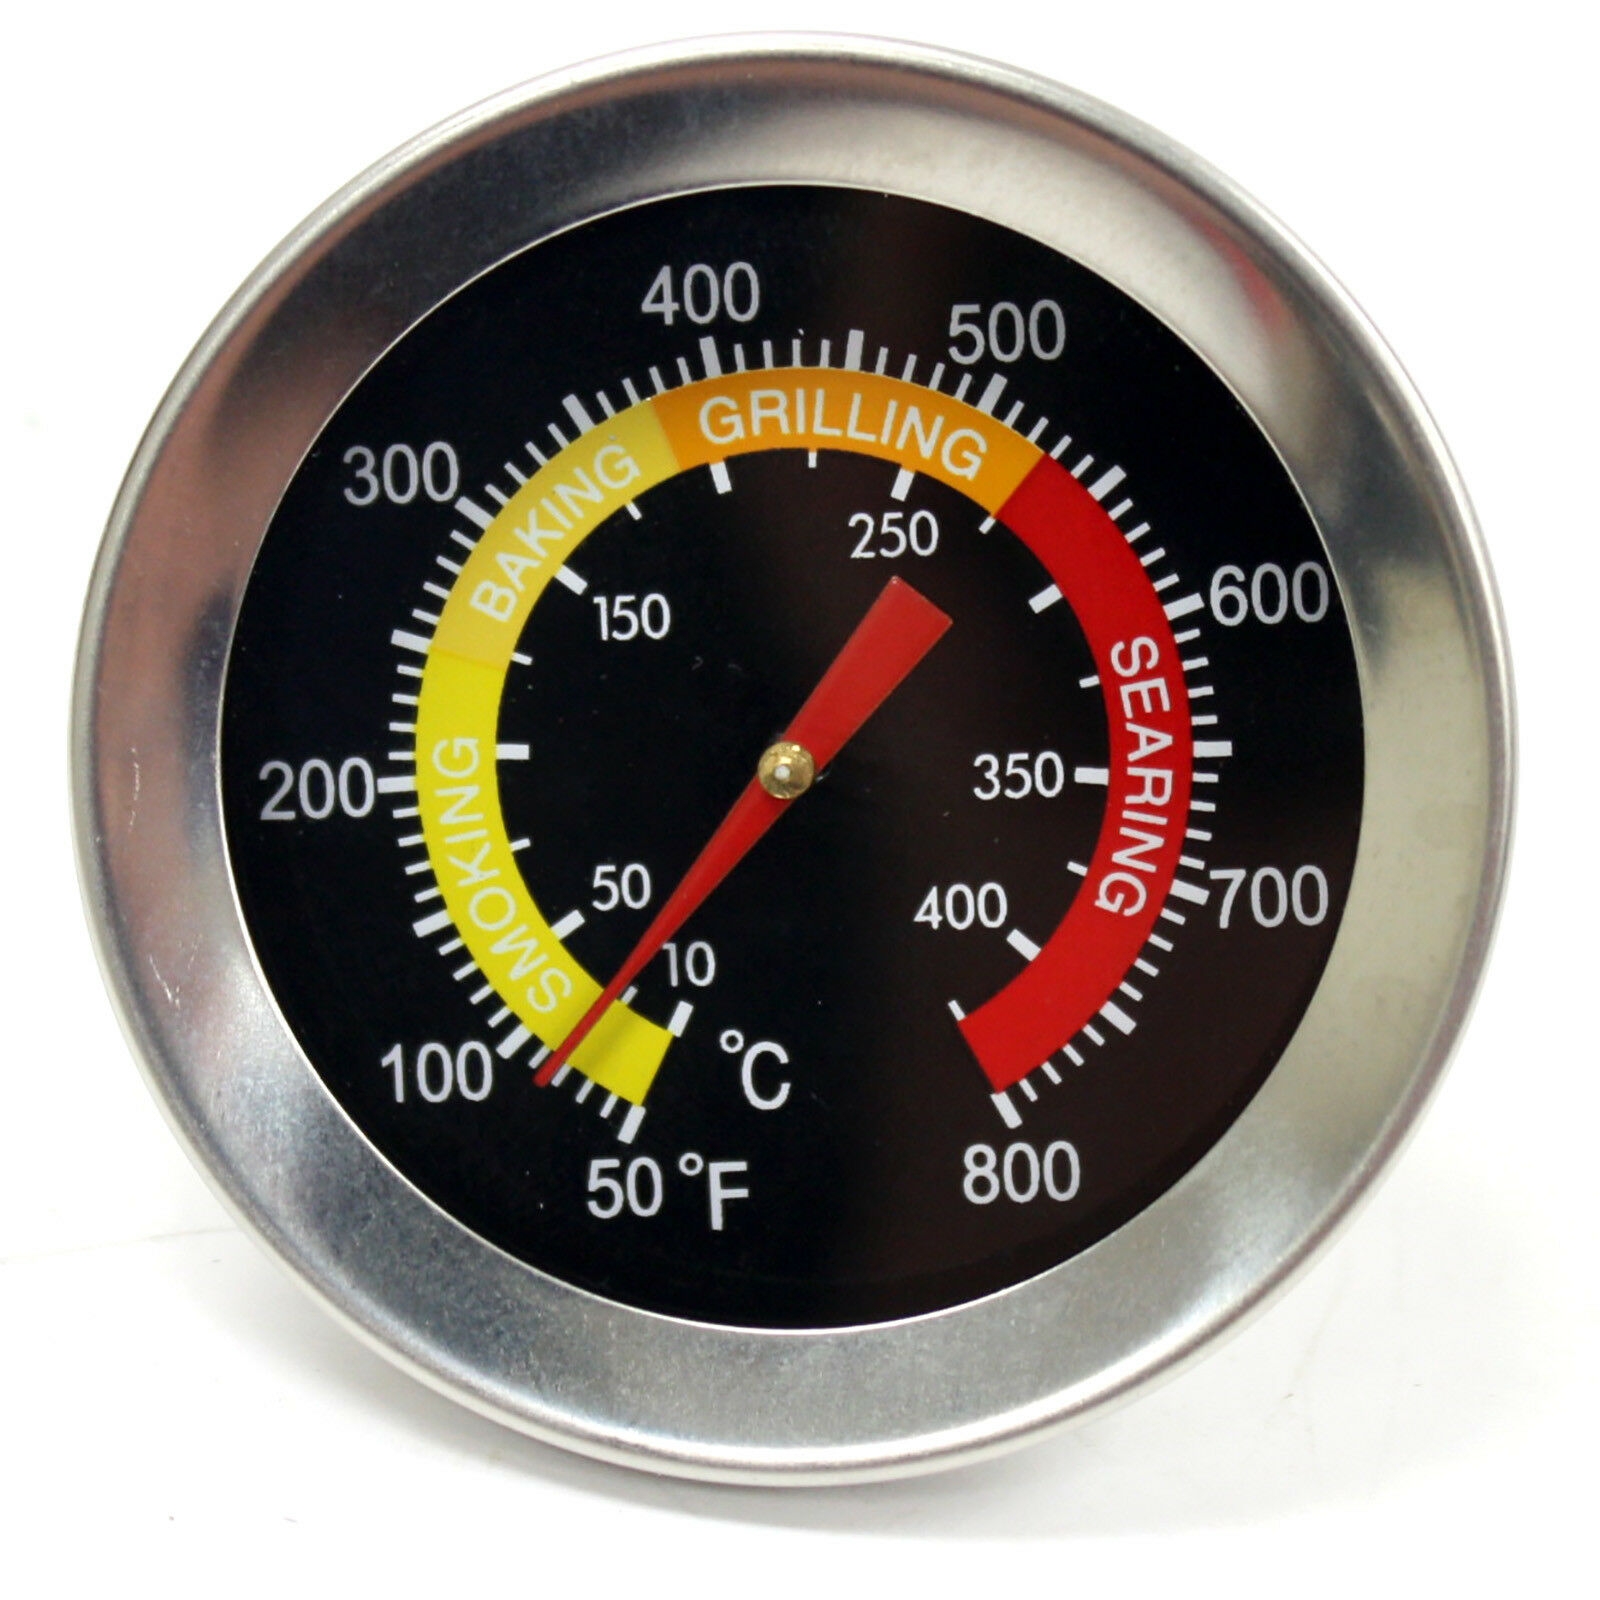 Barbecue BBQ Smoker Grill Thermometer Temperaturanzeige Edelstahl 50-500 Q8Y7